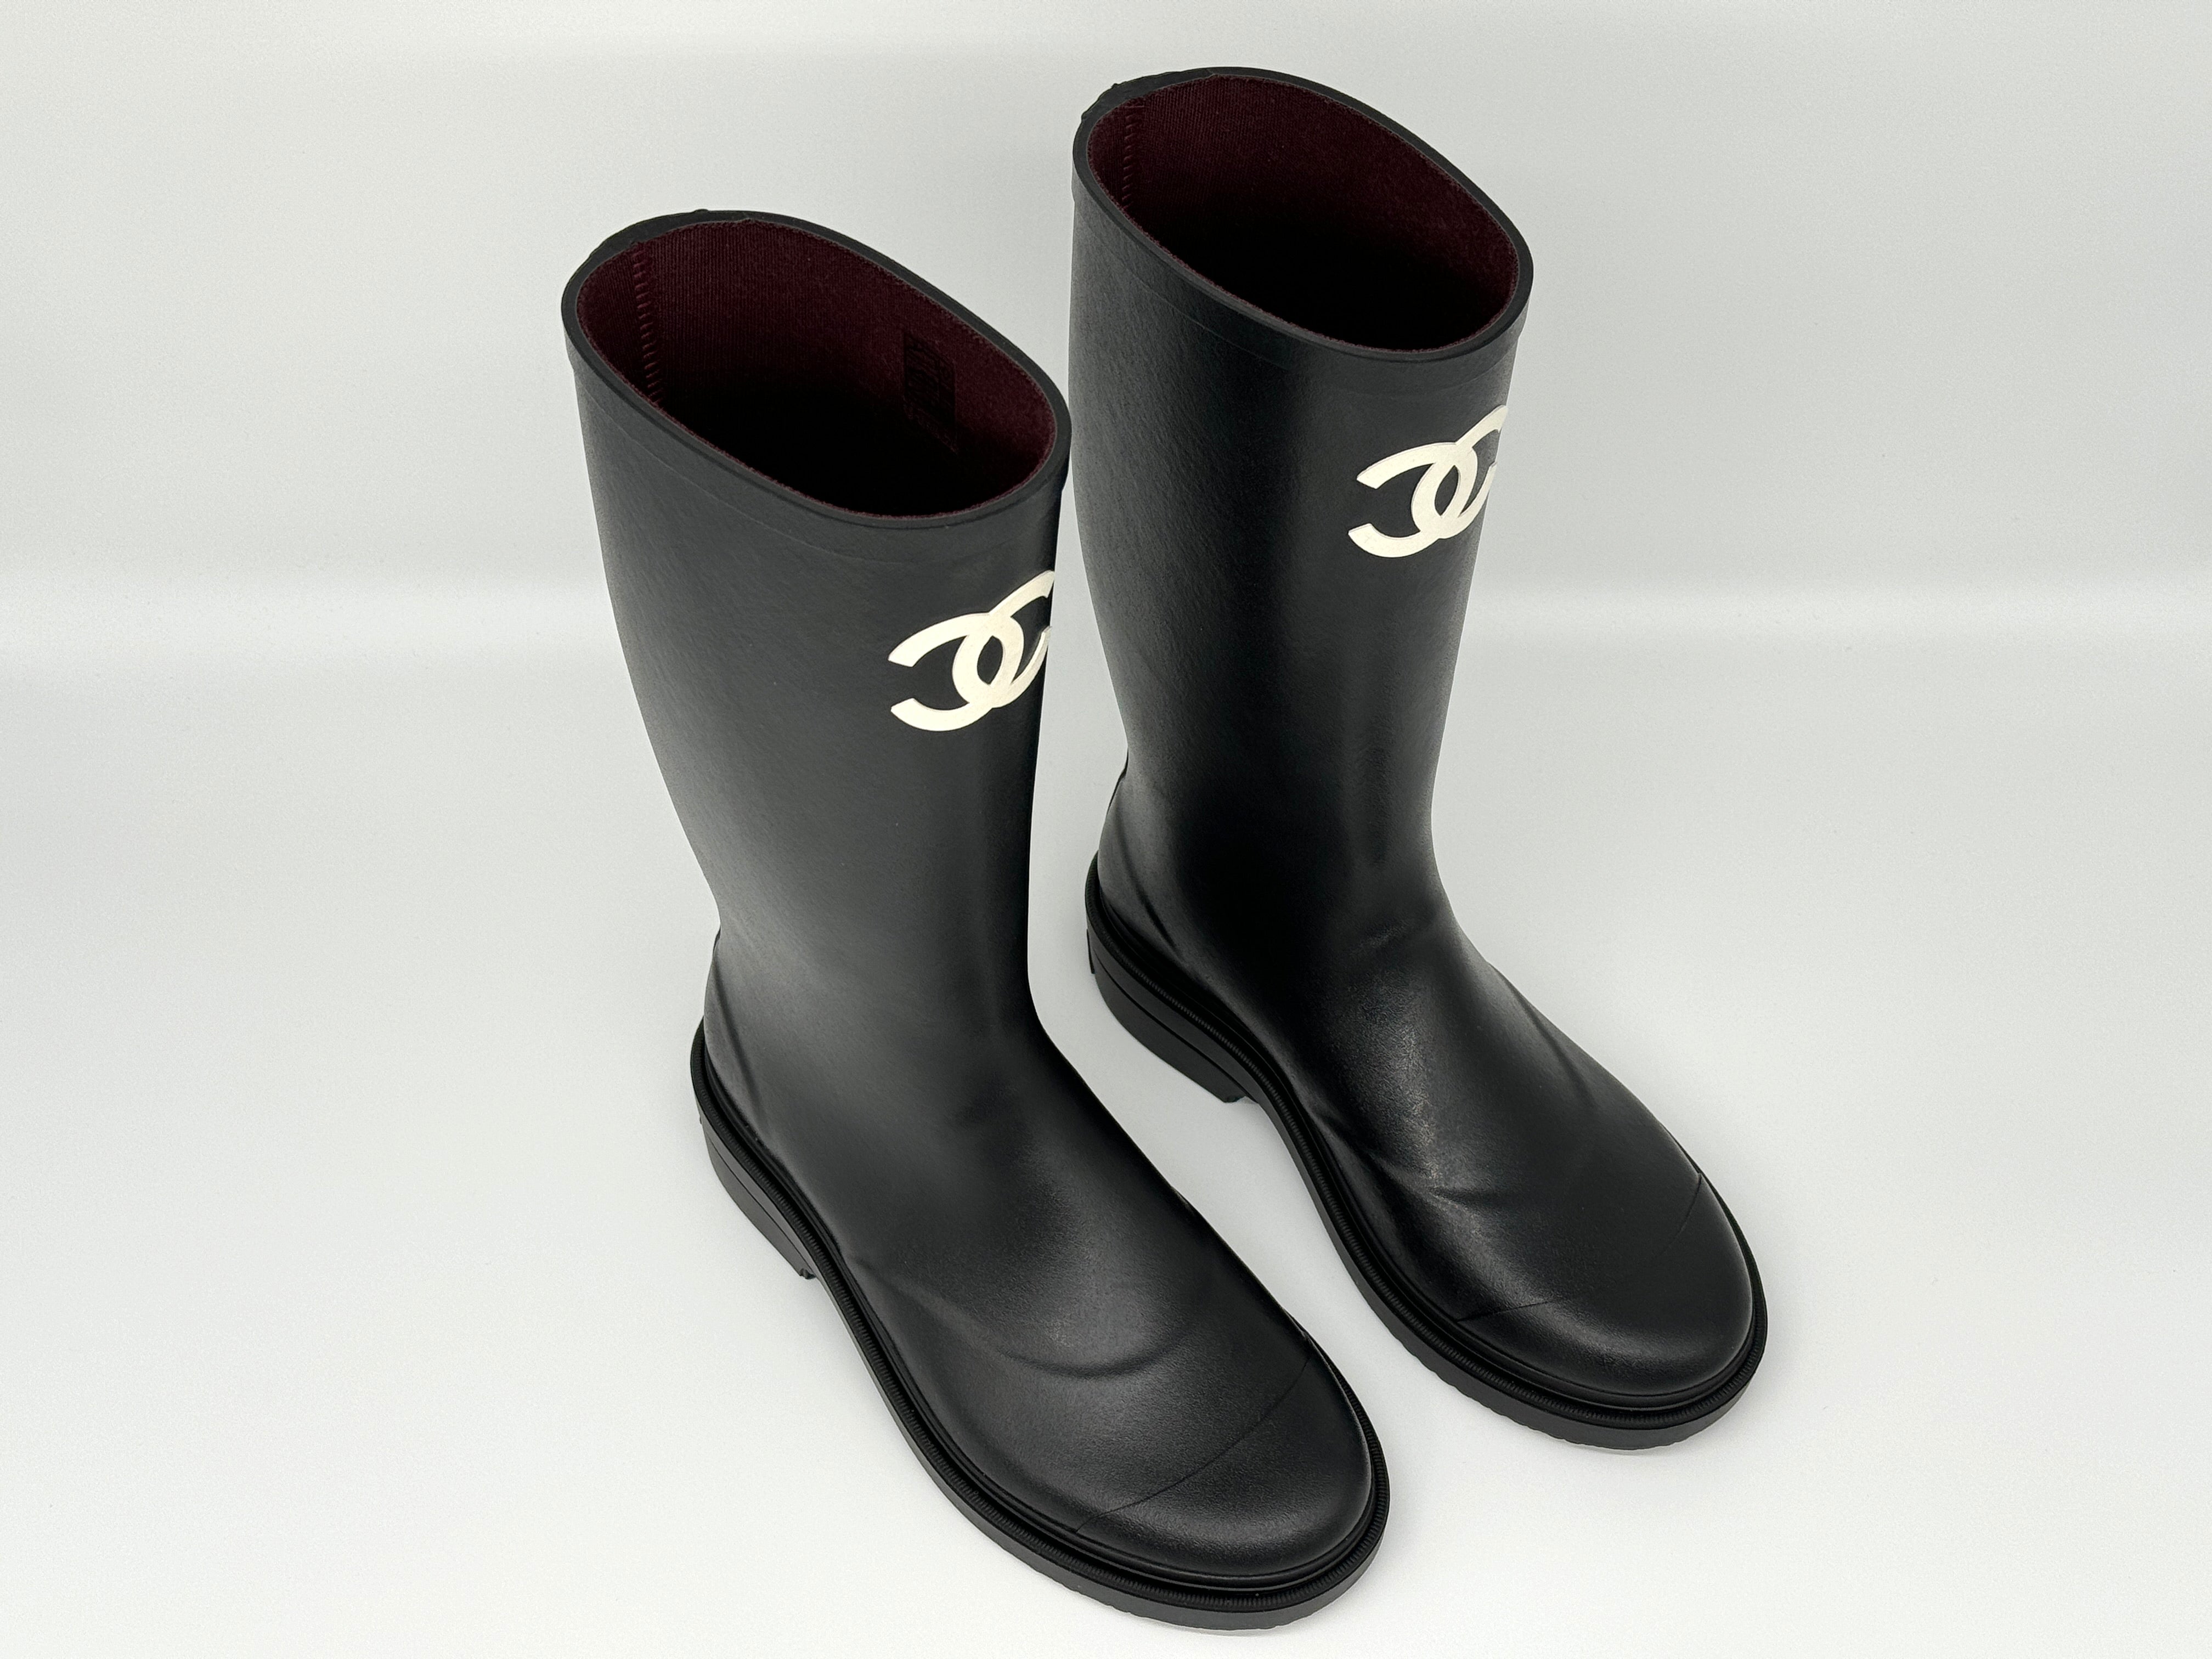 *HOT* Chanel Rubber Rain Boots